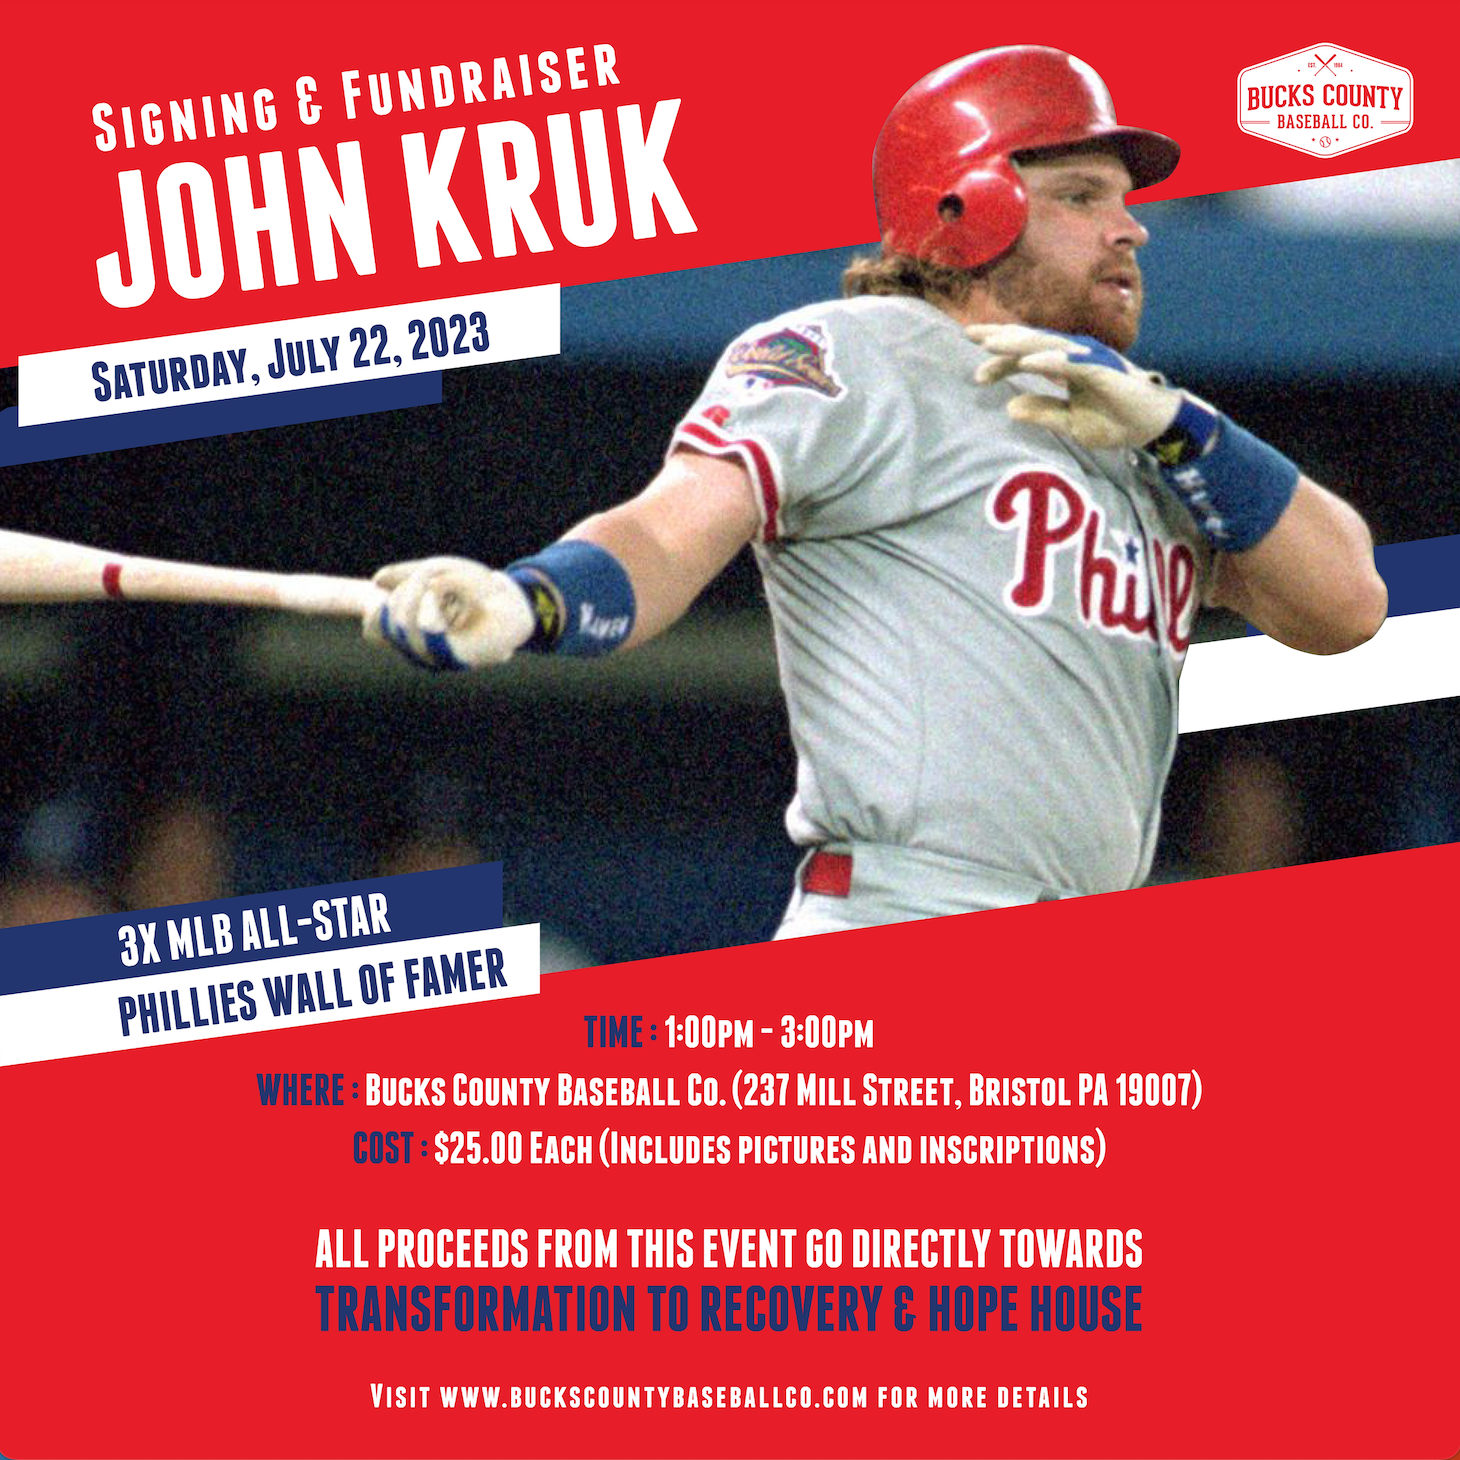 John Kruk Appearance & Fundraiser on July 22 - Bucks County Baseball Co.